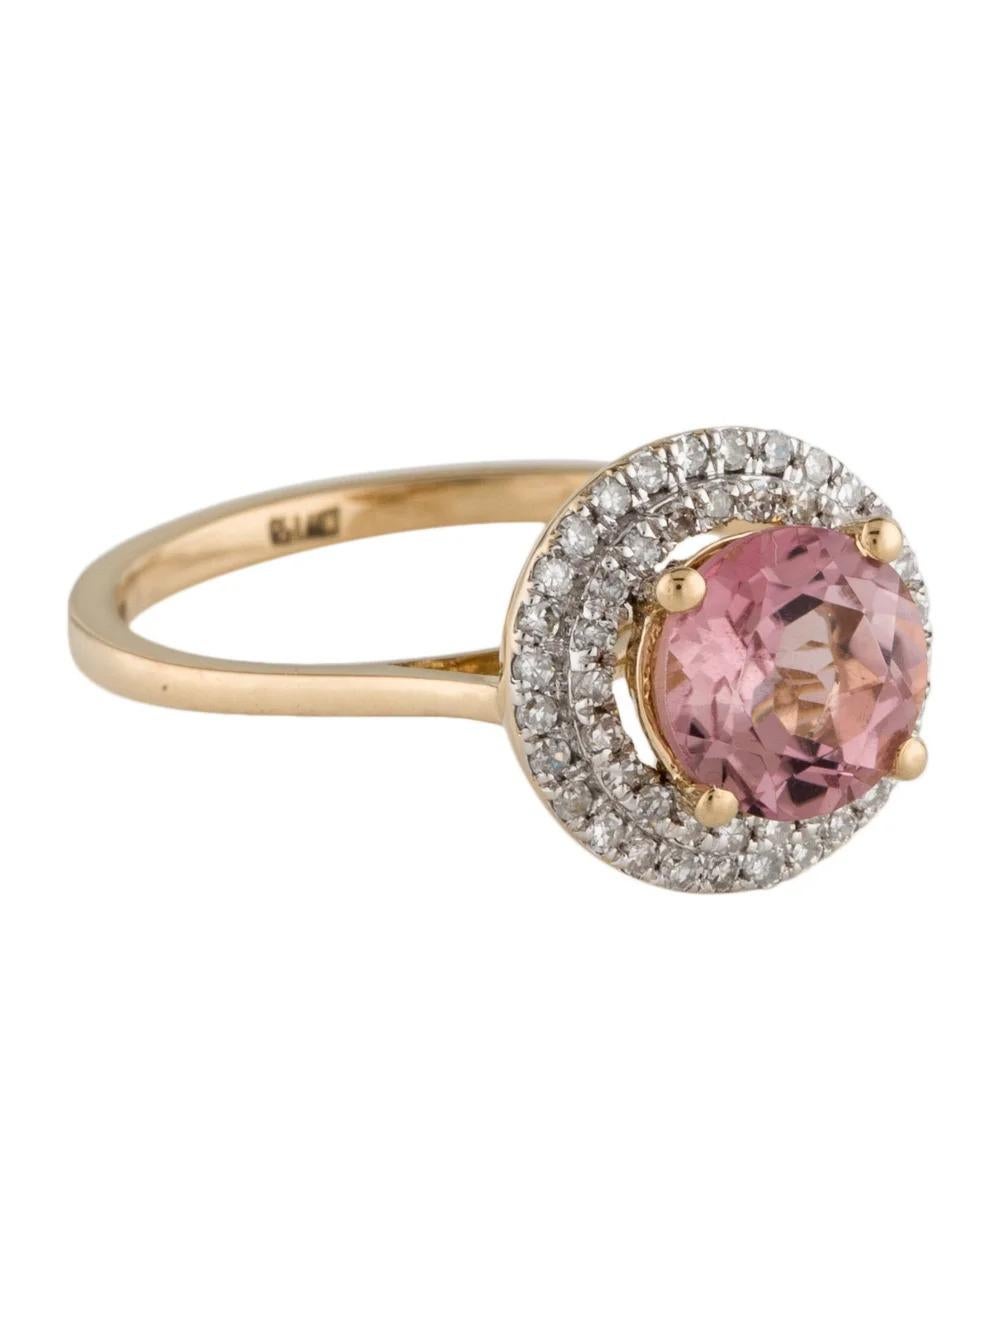 14K Tourmaline & Diamond Cocktail Ring, Size 6.5 - Elegant Statement Jewelry For Sale